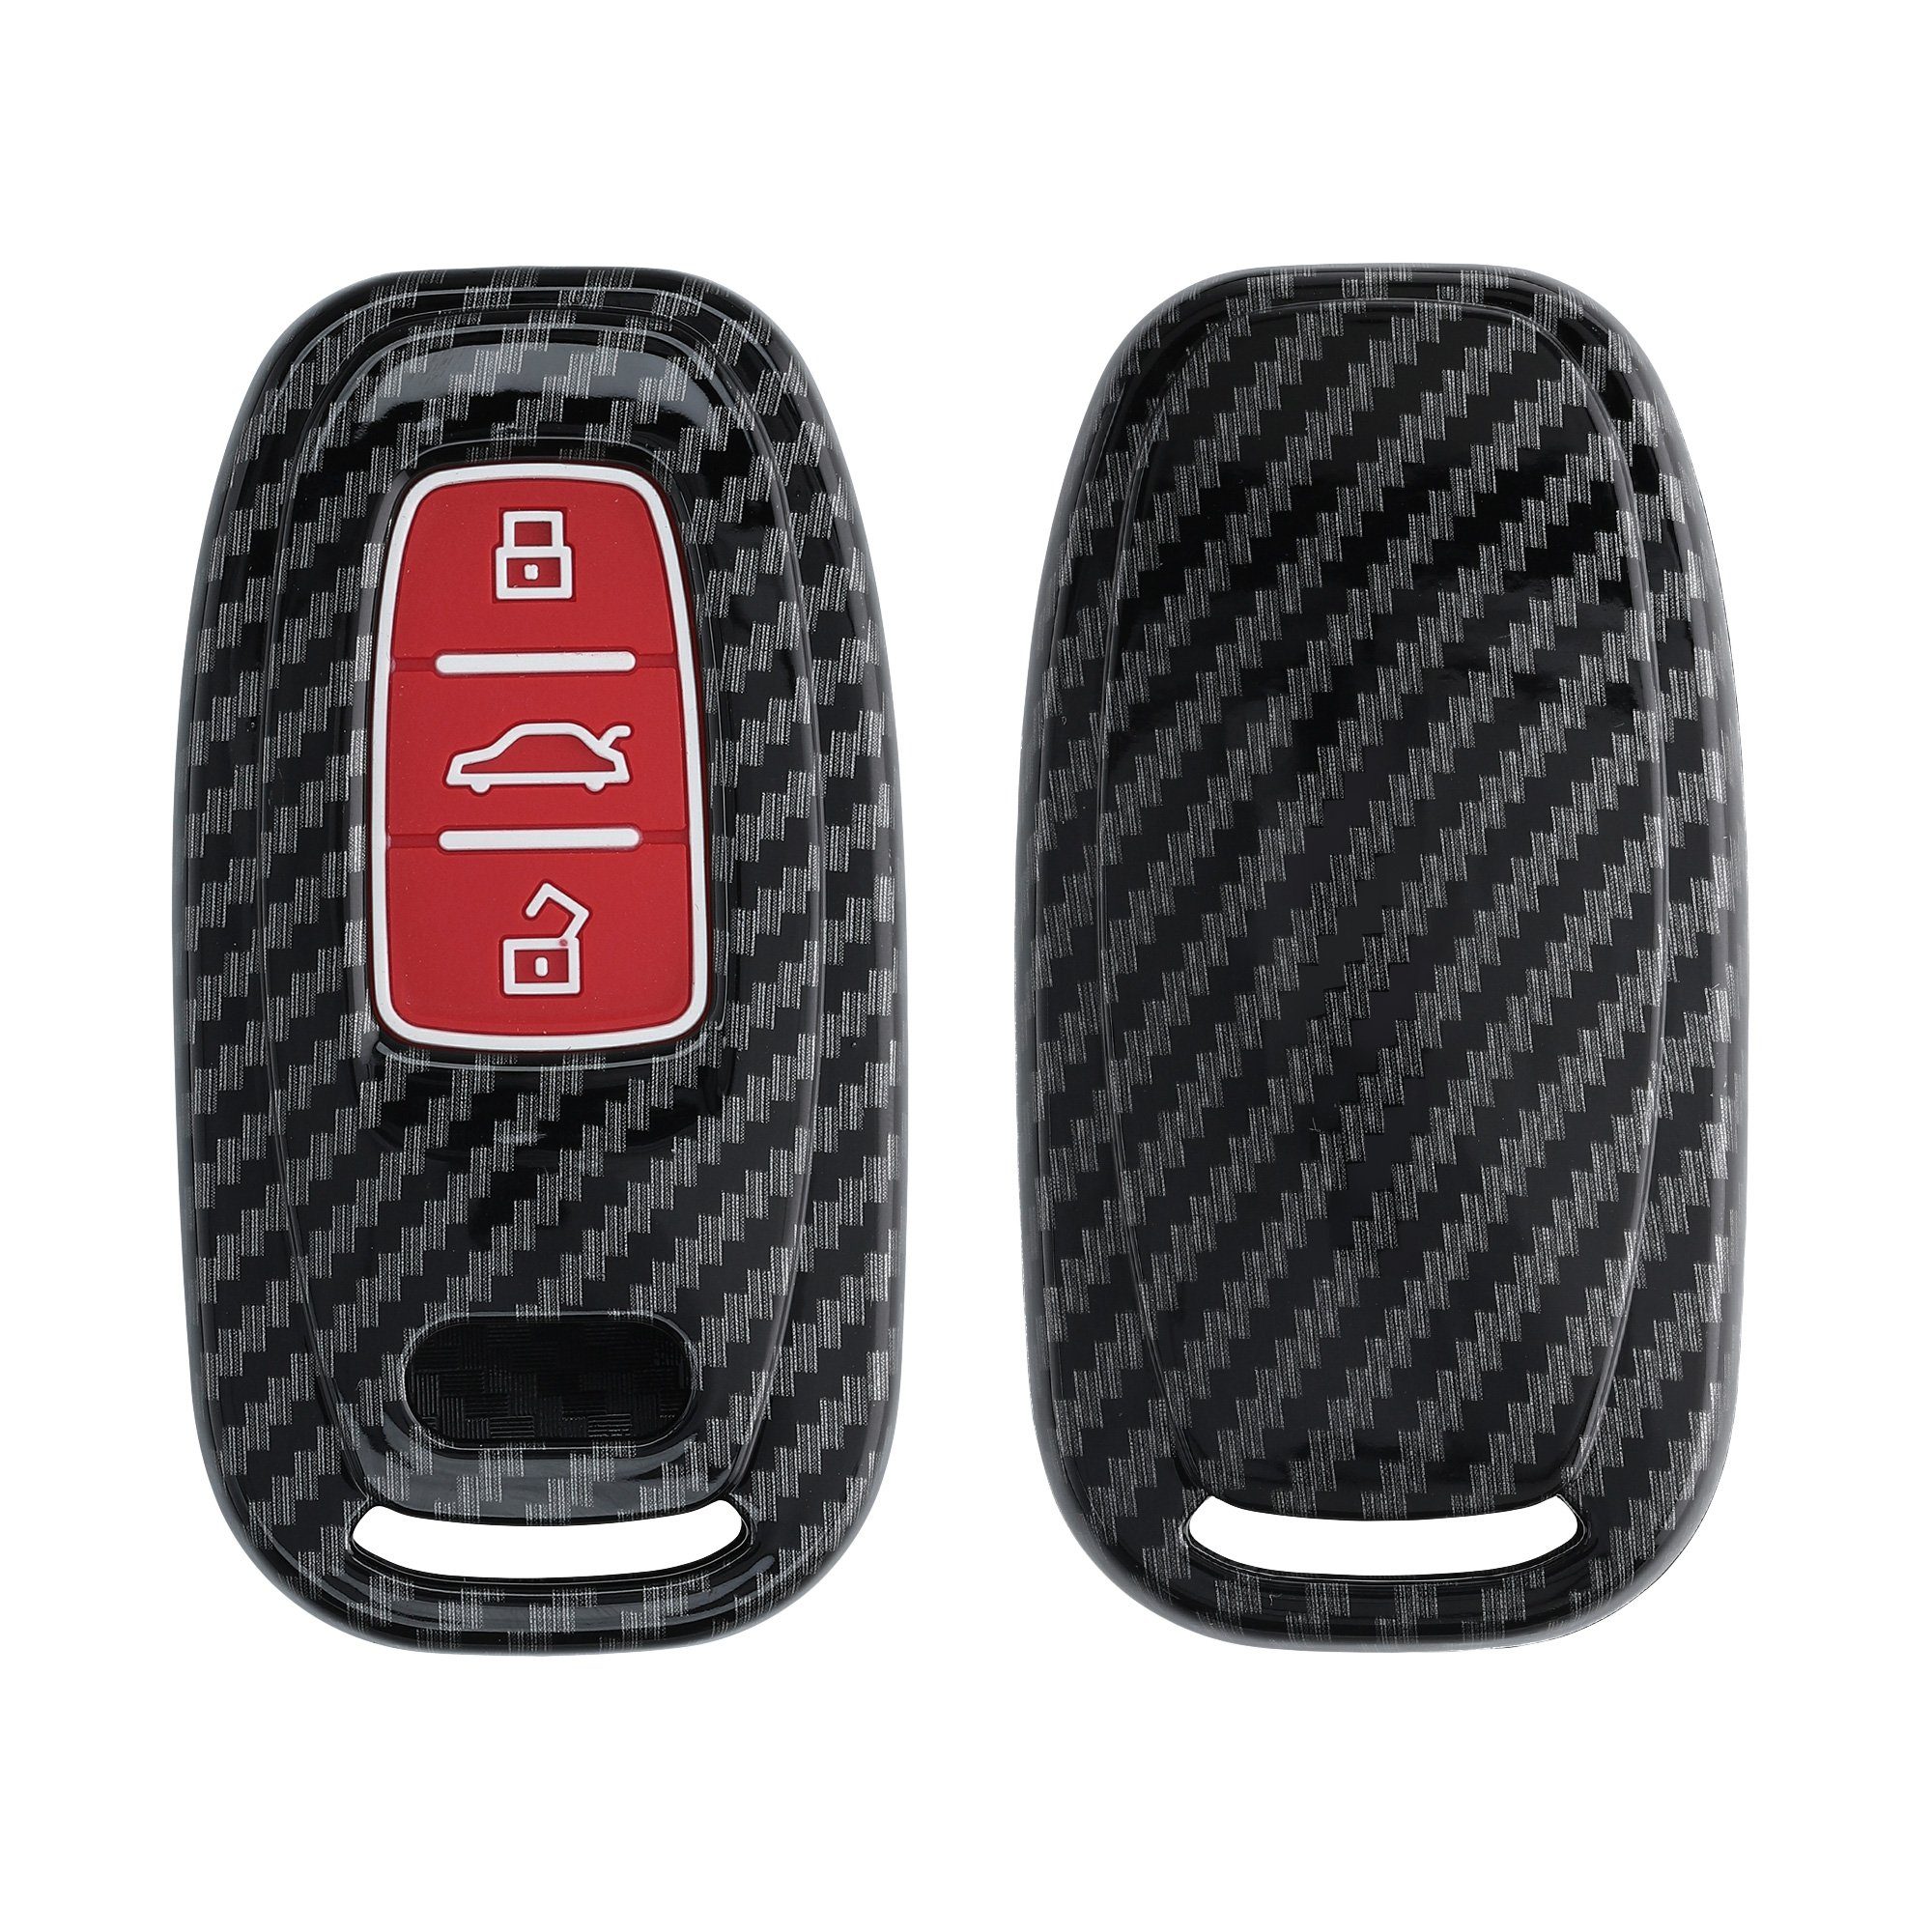 kwmobile Etui, Autoschlüssel Hülle für Audi A6 A7 A8 Q7 Q8 - TPU  Schlüsselhülle für Audi A6 A7 A8 Q7 Q8 3-Tasten Autoschlüssel Keyless  Carbon Design